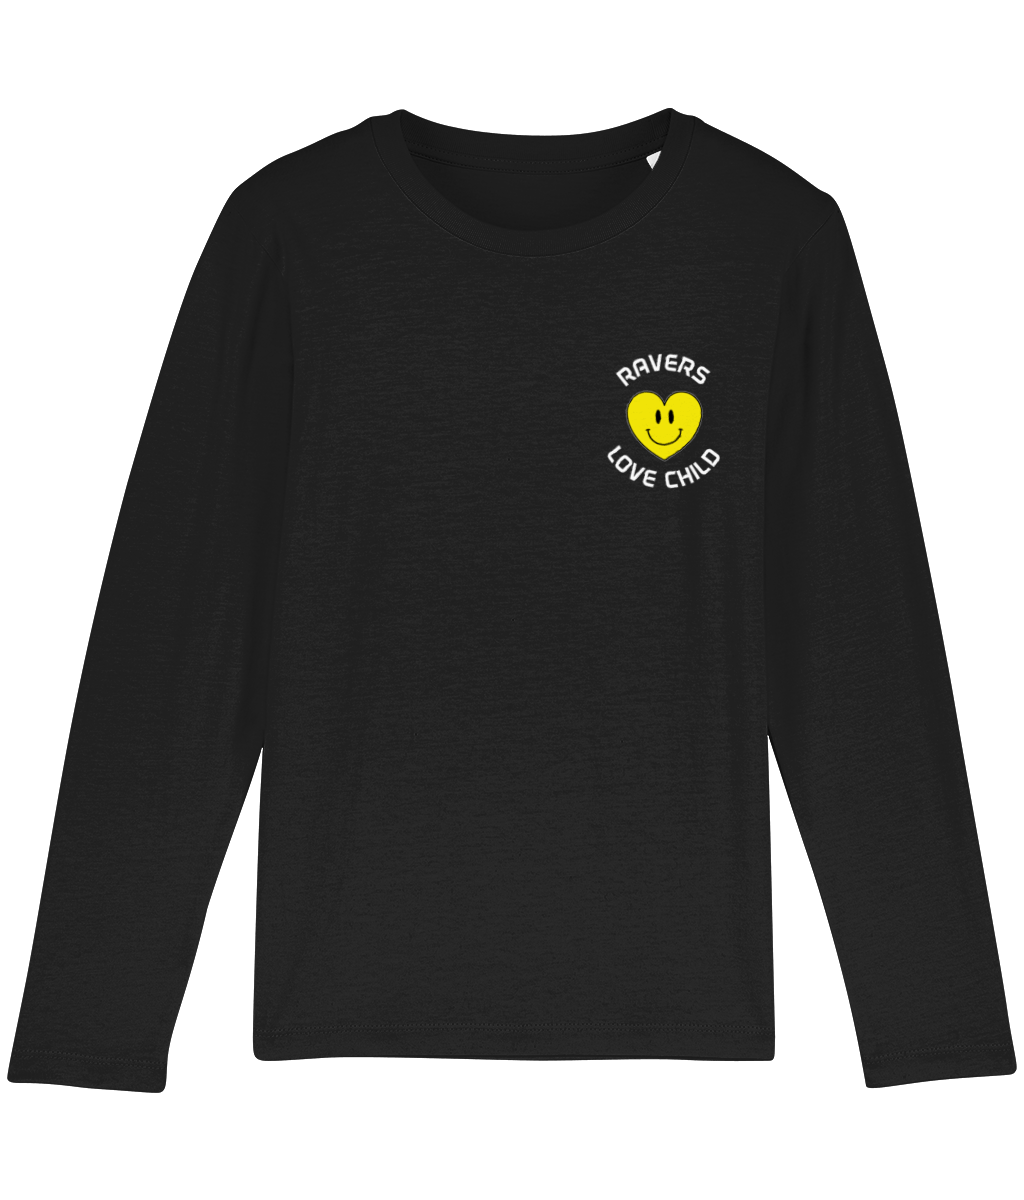 Long Sleeve T Shirt, 100% Organic Soft Cotton, Ravers Love Child!